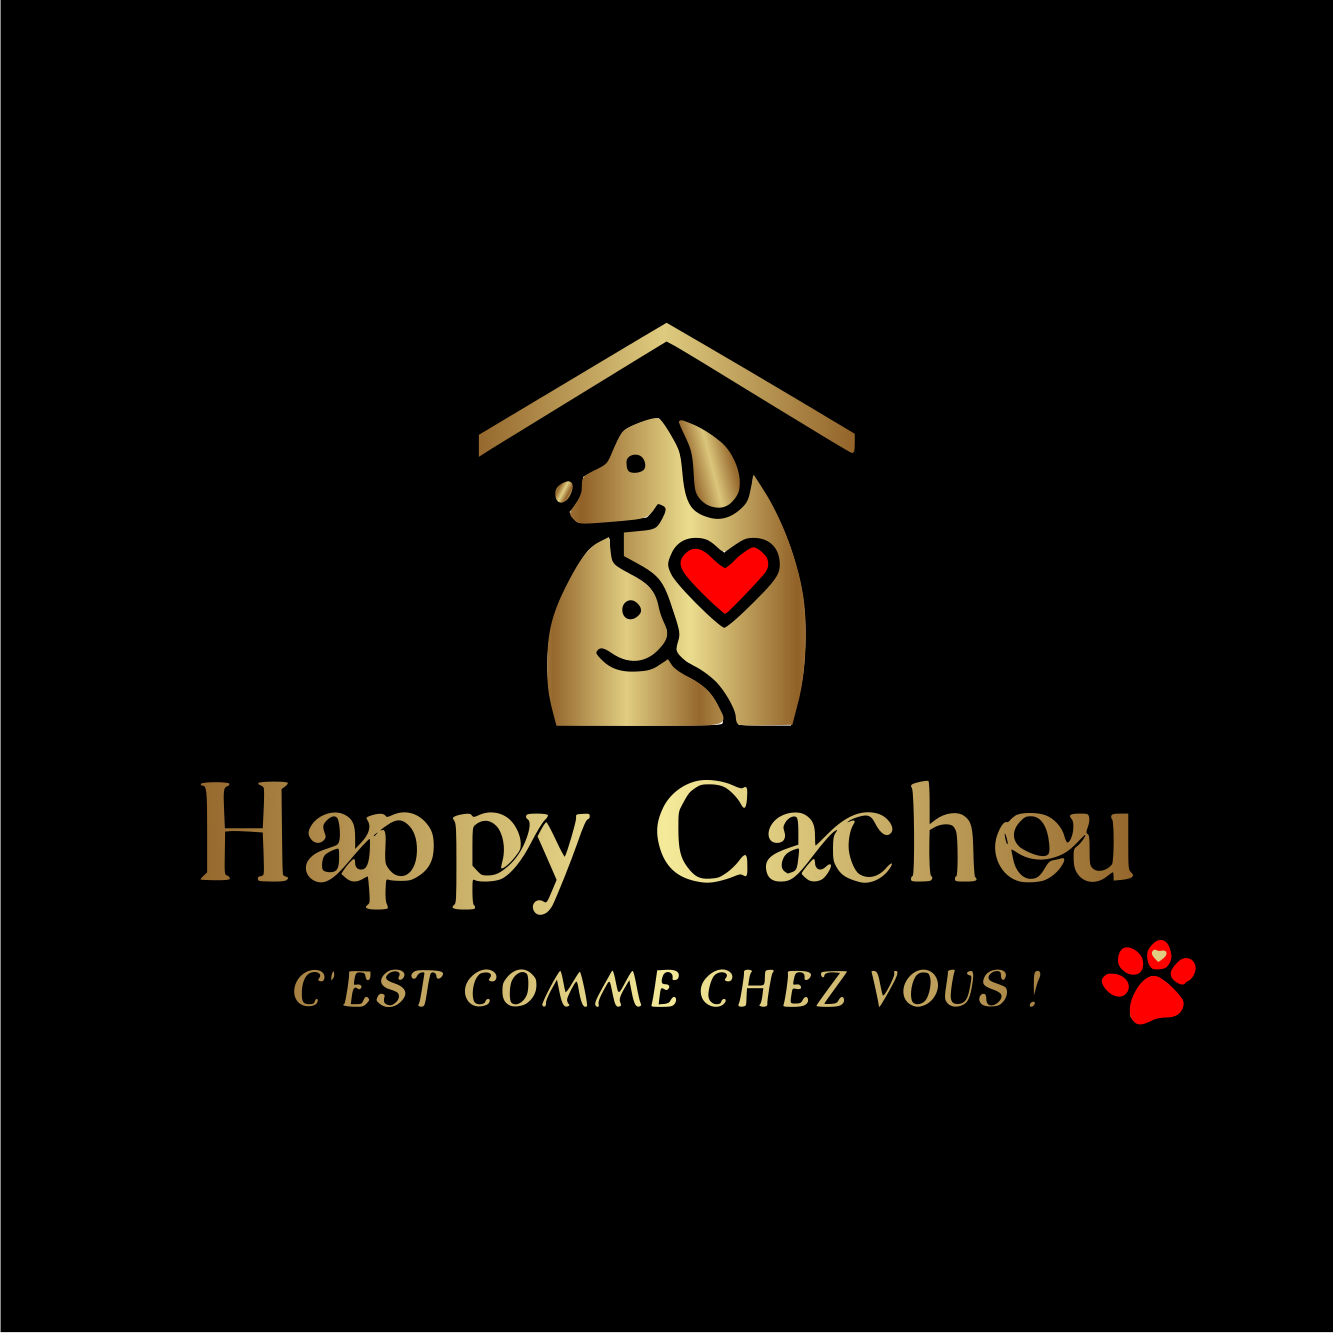 Happy Cachou